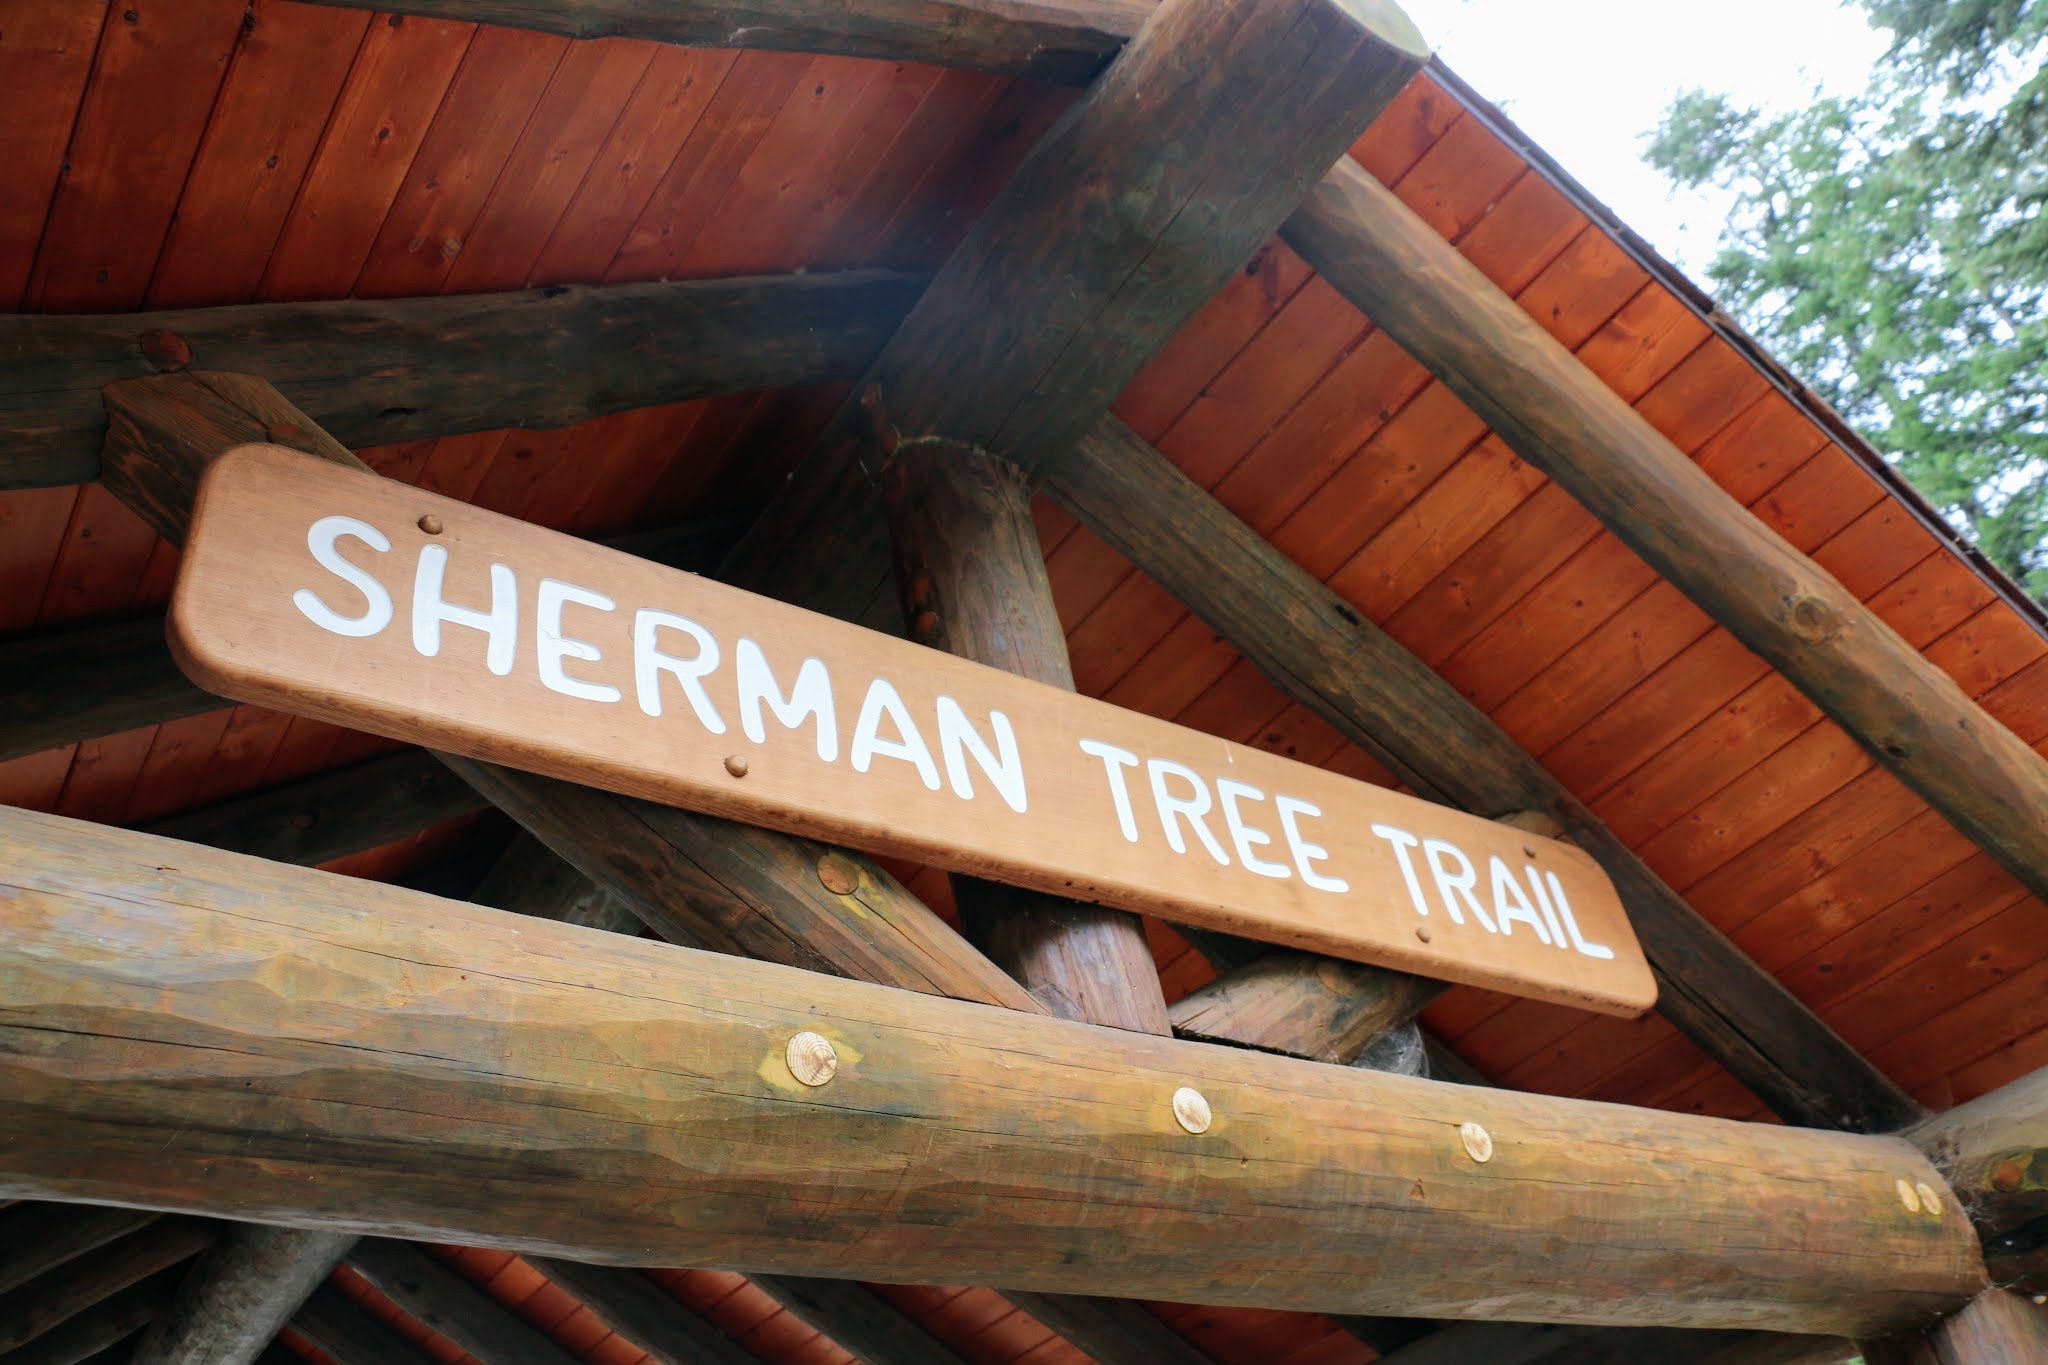 Sherman Tree Trail